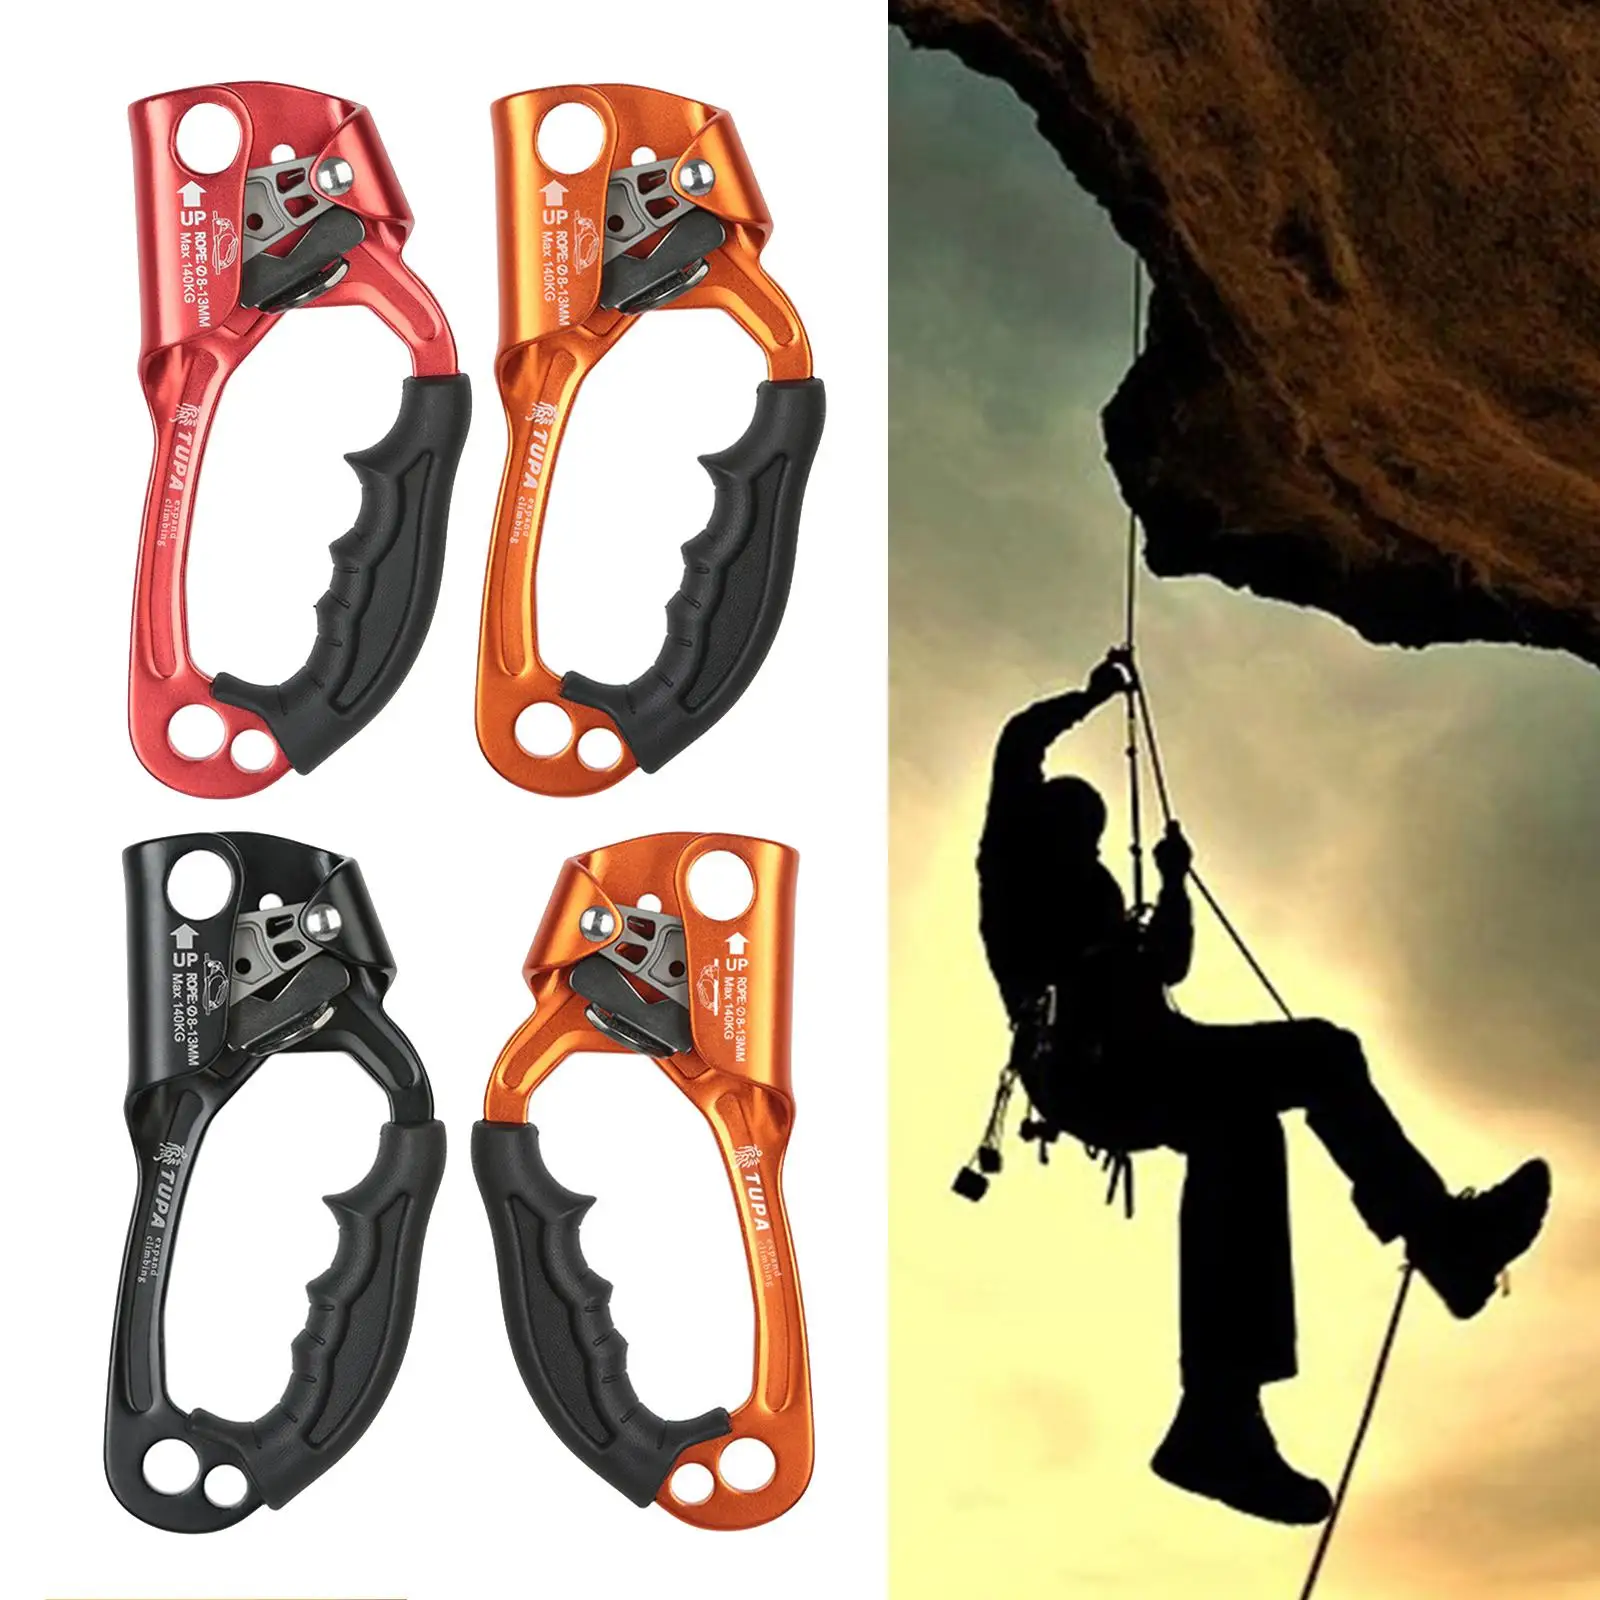  Foot Ascender Rope Grab Riser  8-13mm Rope for Rock Climbing